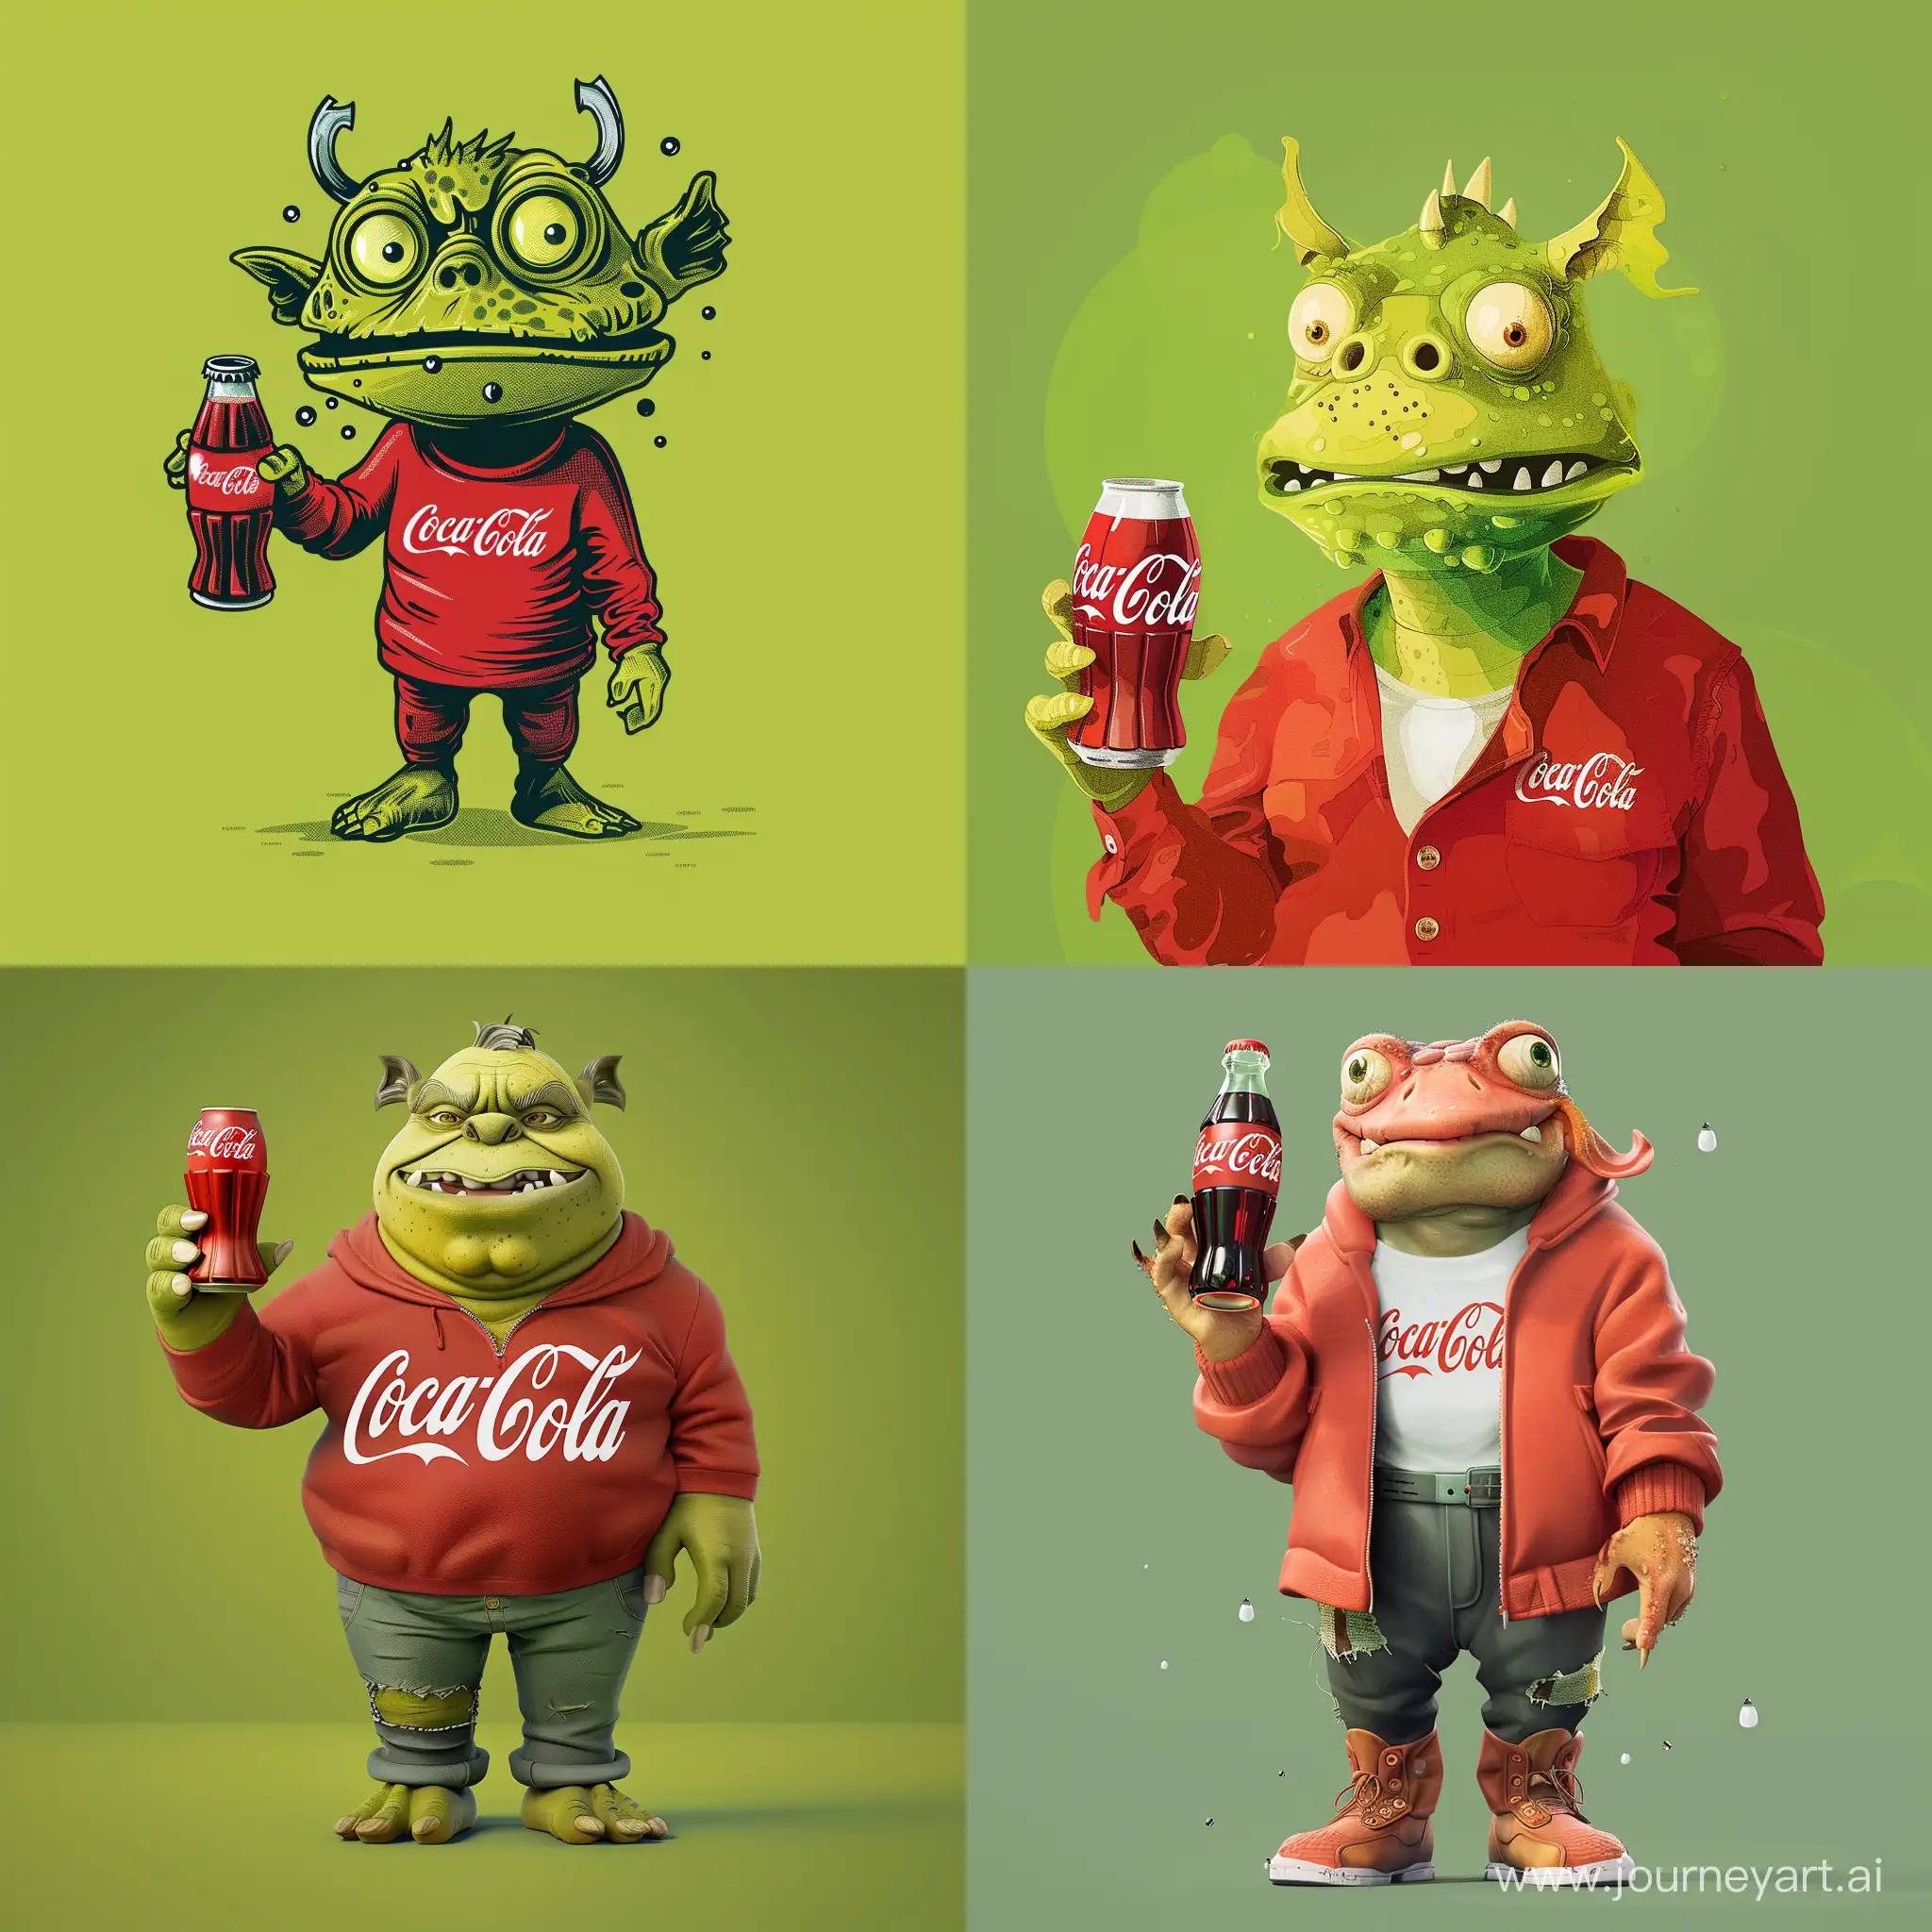 Minimalist-2D-Illustration-Shrek-Enjoying-CocaCola-in-Hand-on-Simple-Green-Background